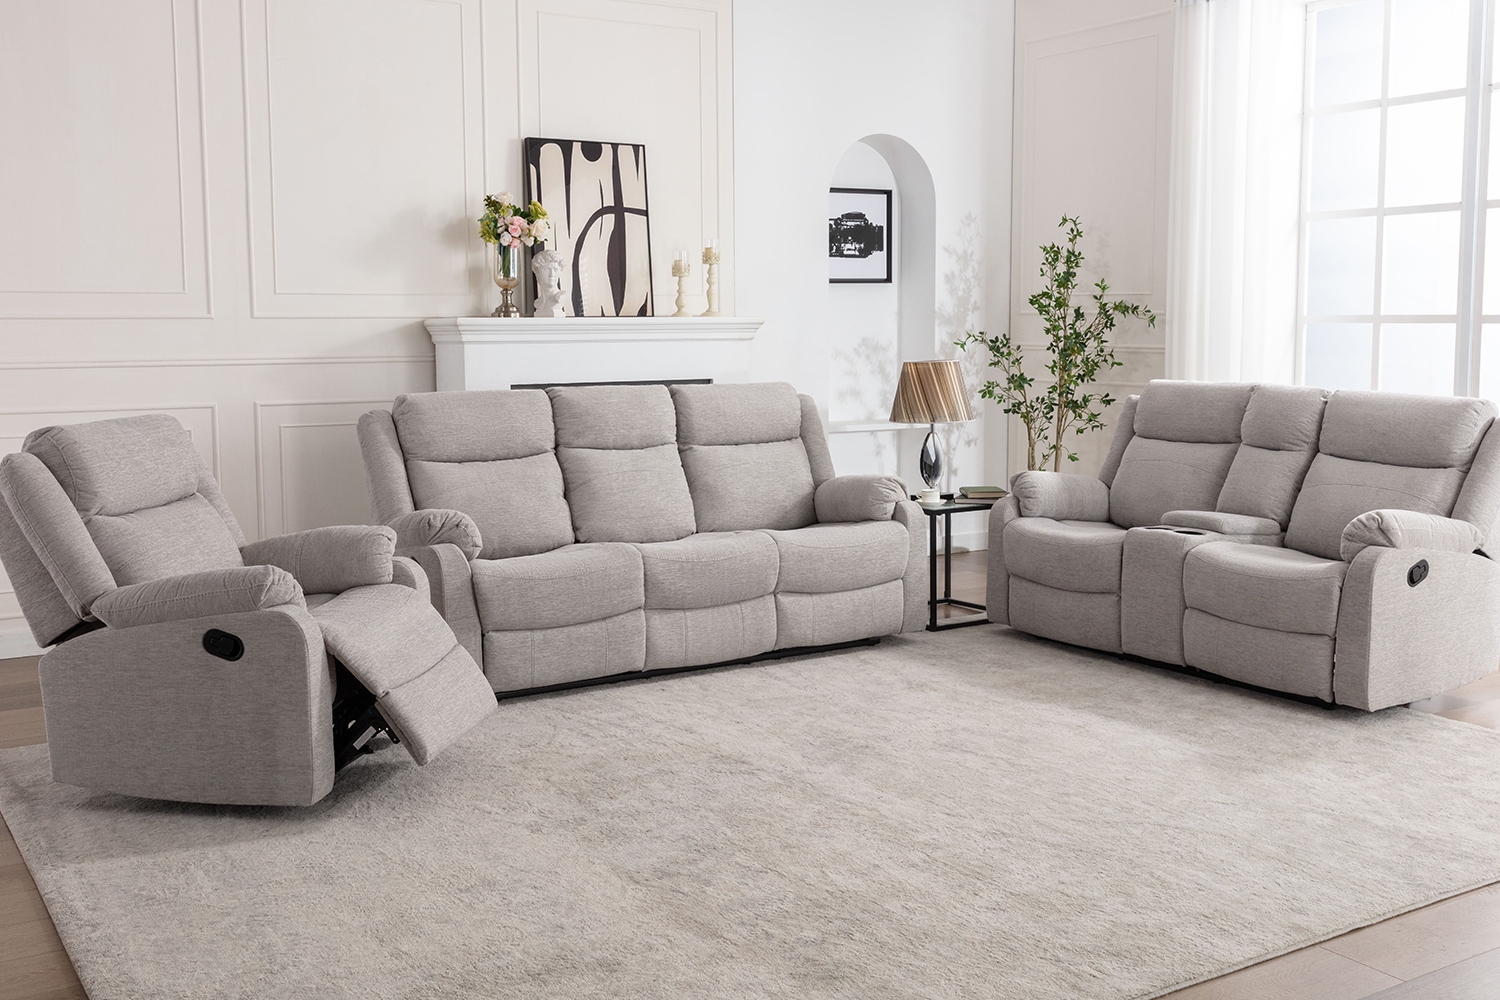 Ellena Plush Silver 2 Seater Recliner Sofa with Storage - Furniture World